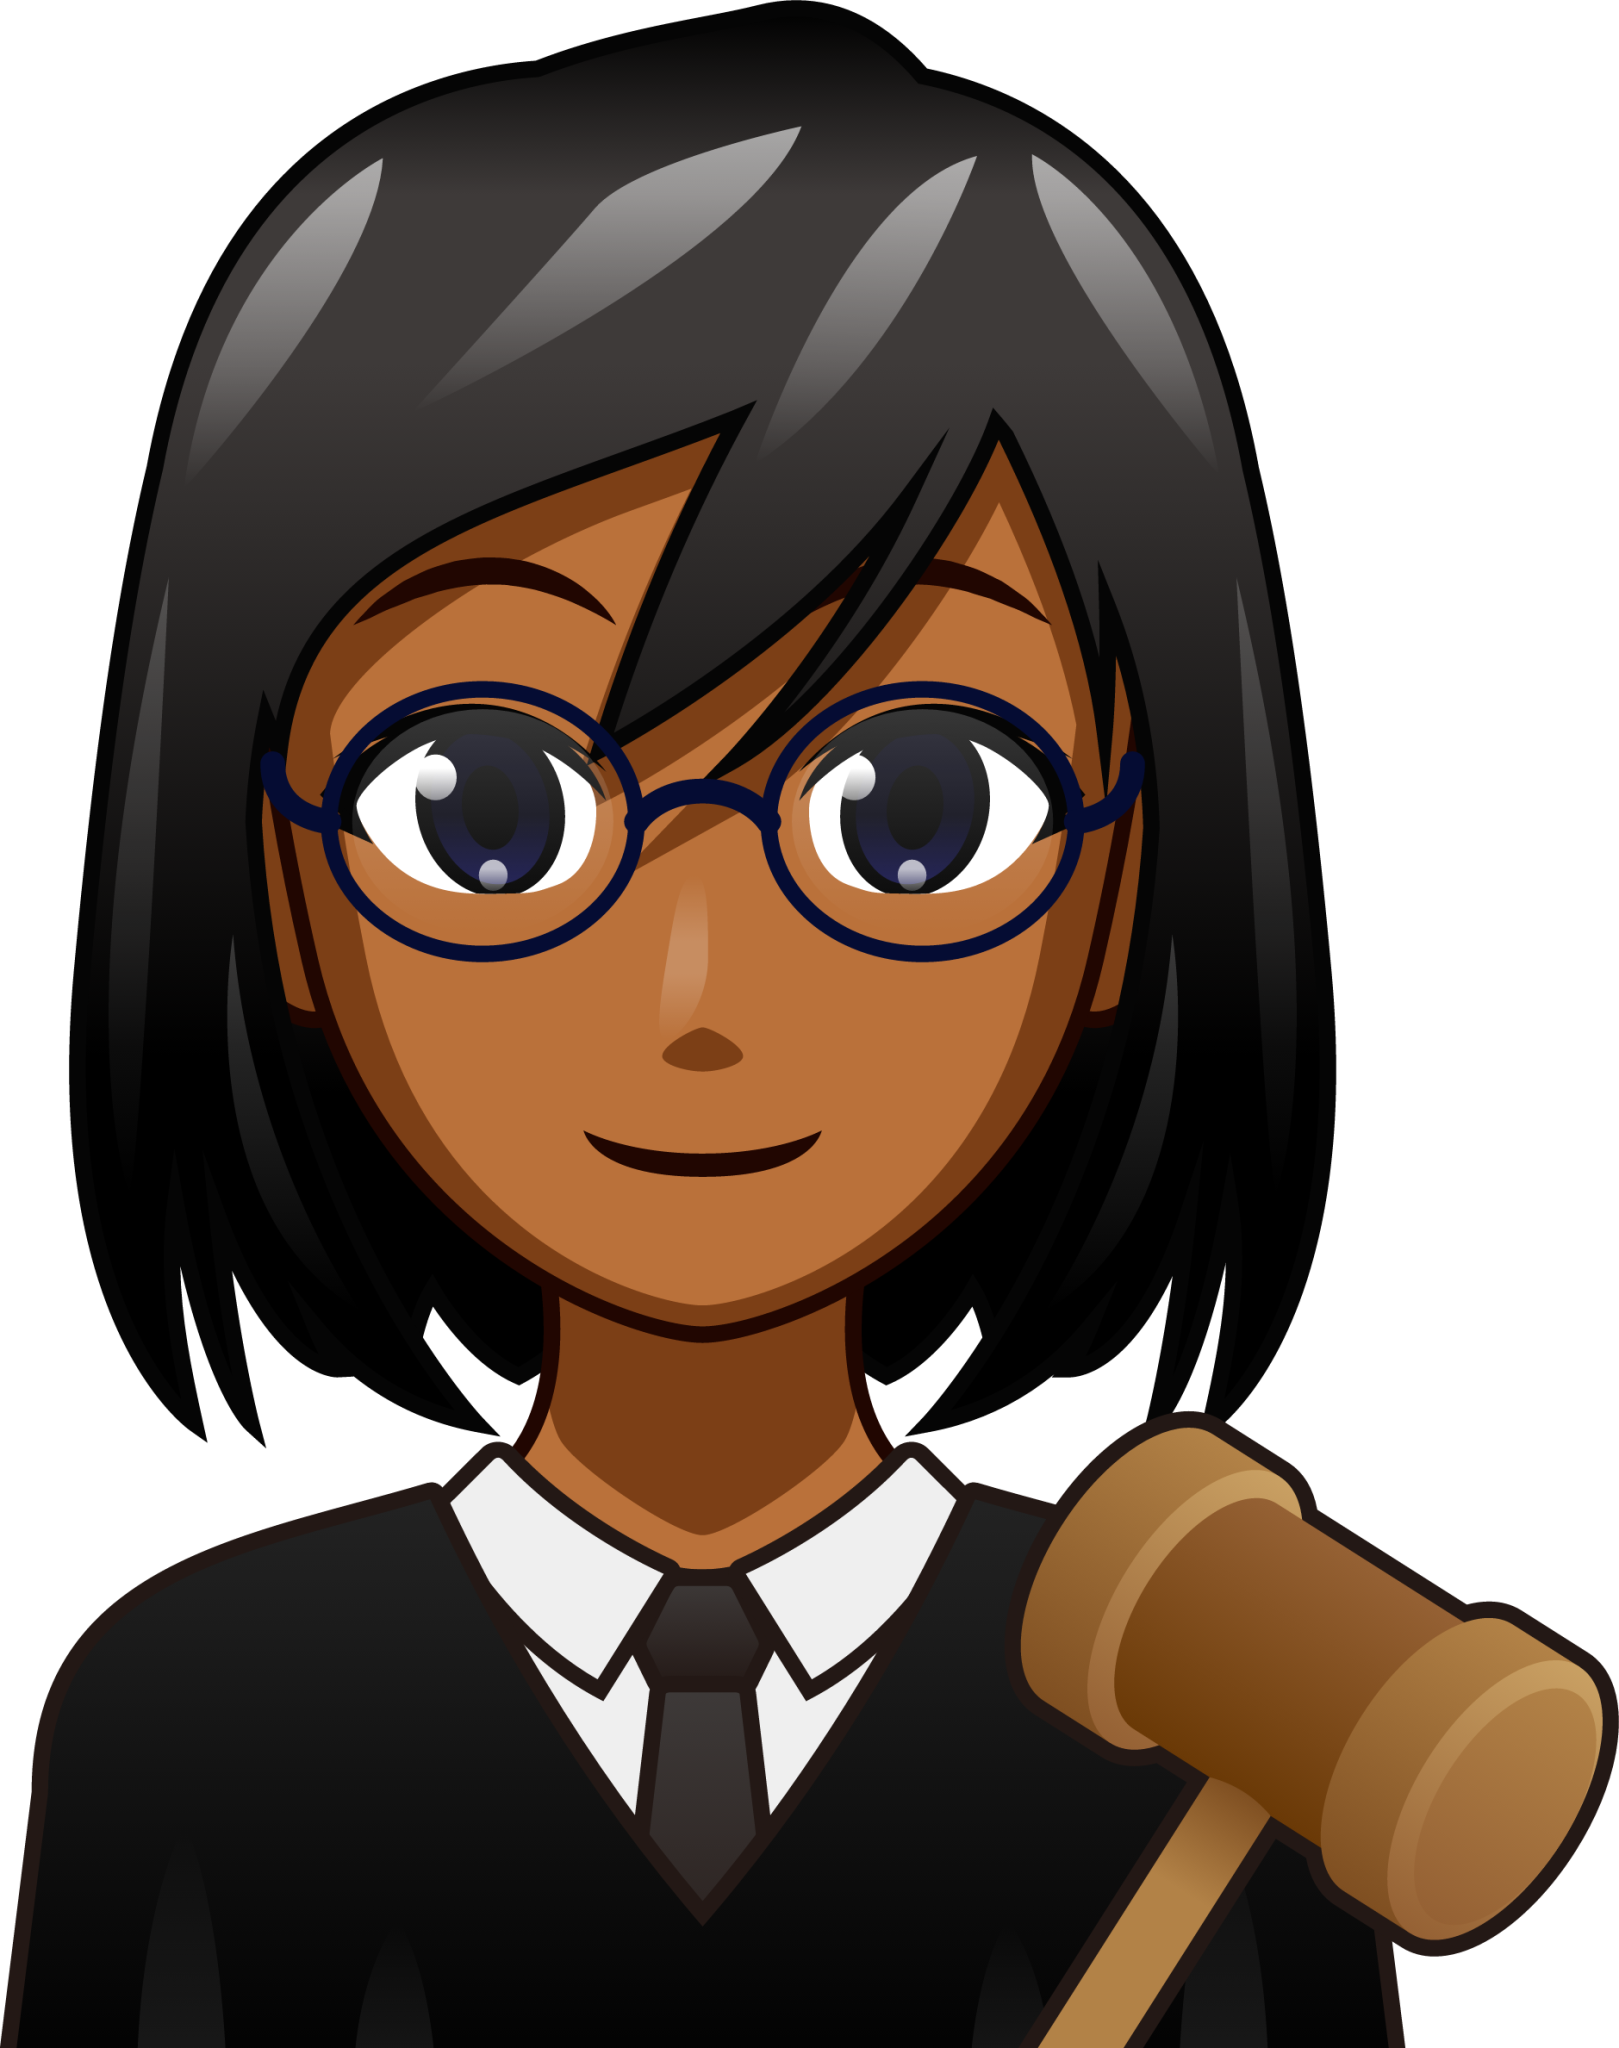 female judge (brown) emoji